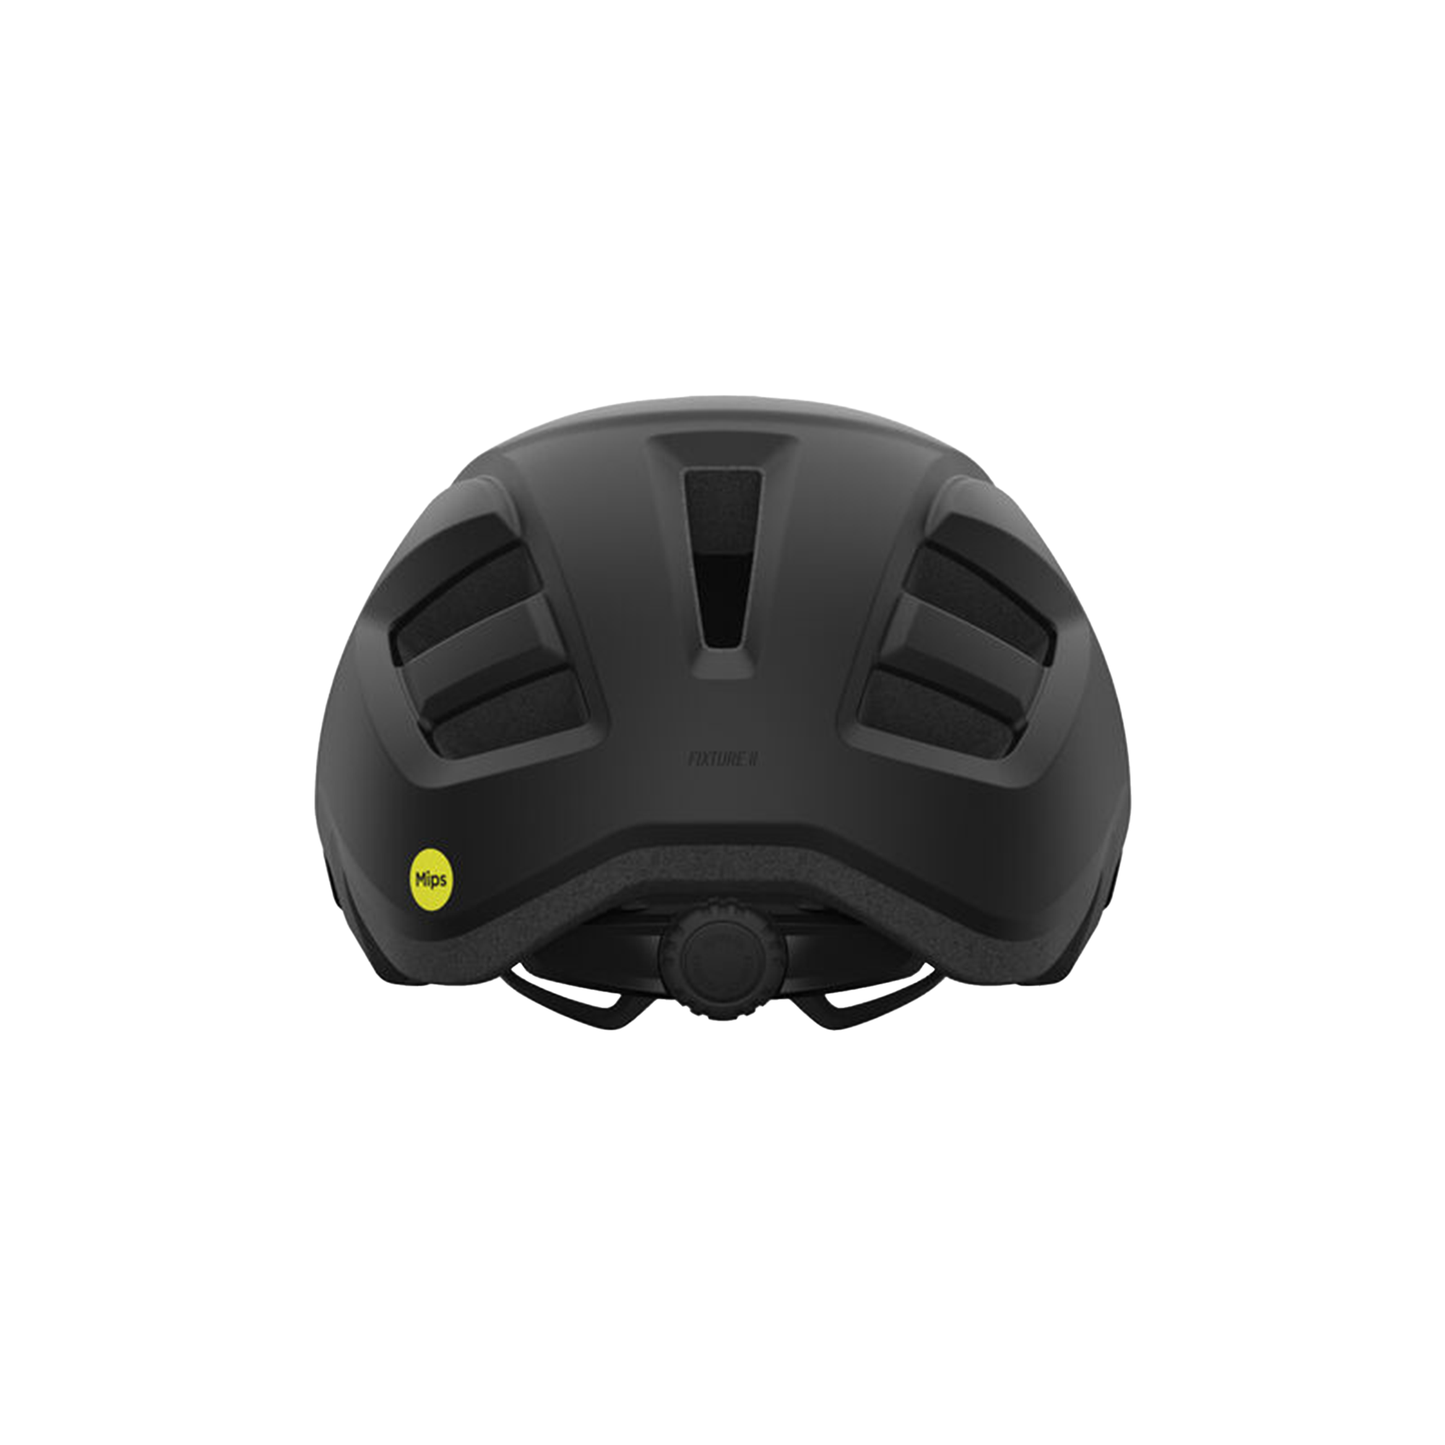 Giro Fixture MIPS II XL Helmet Matte Black UXL Bike Helmets